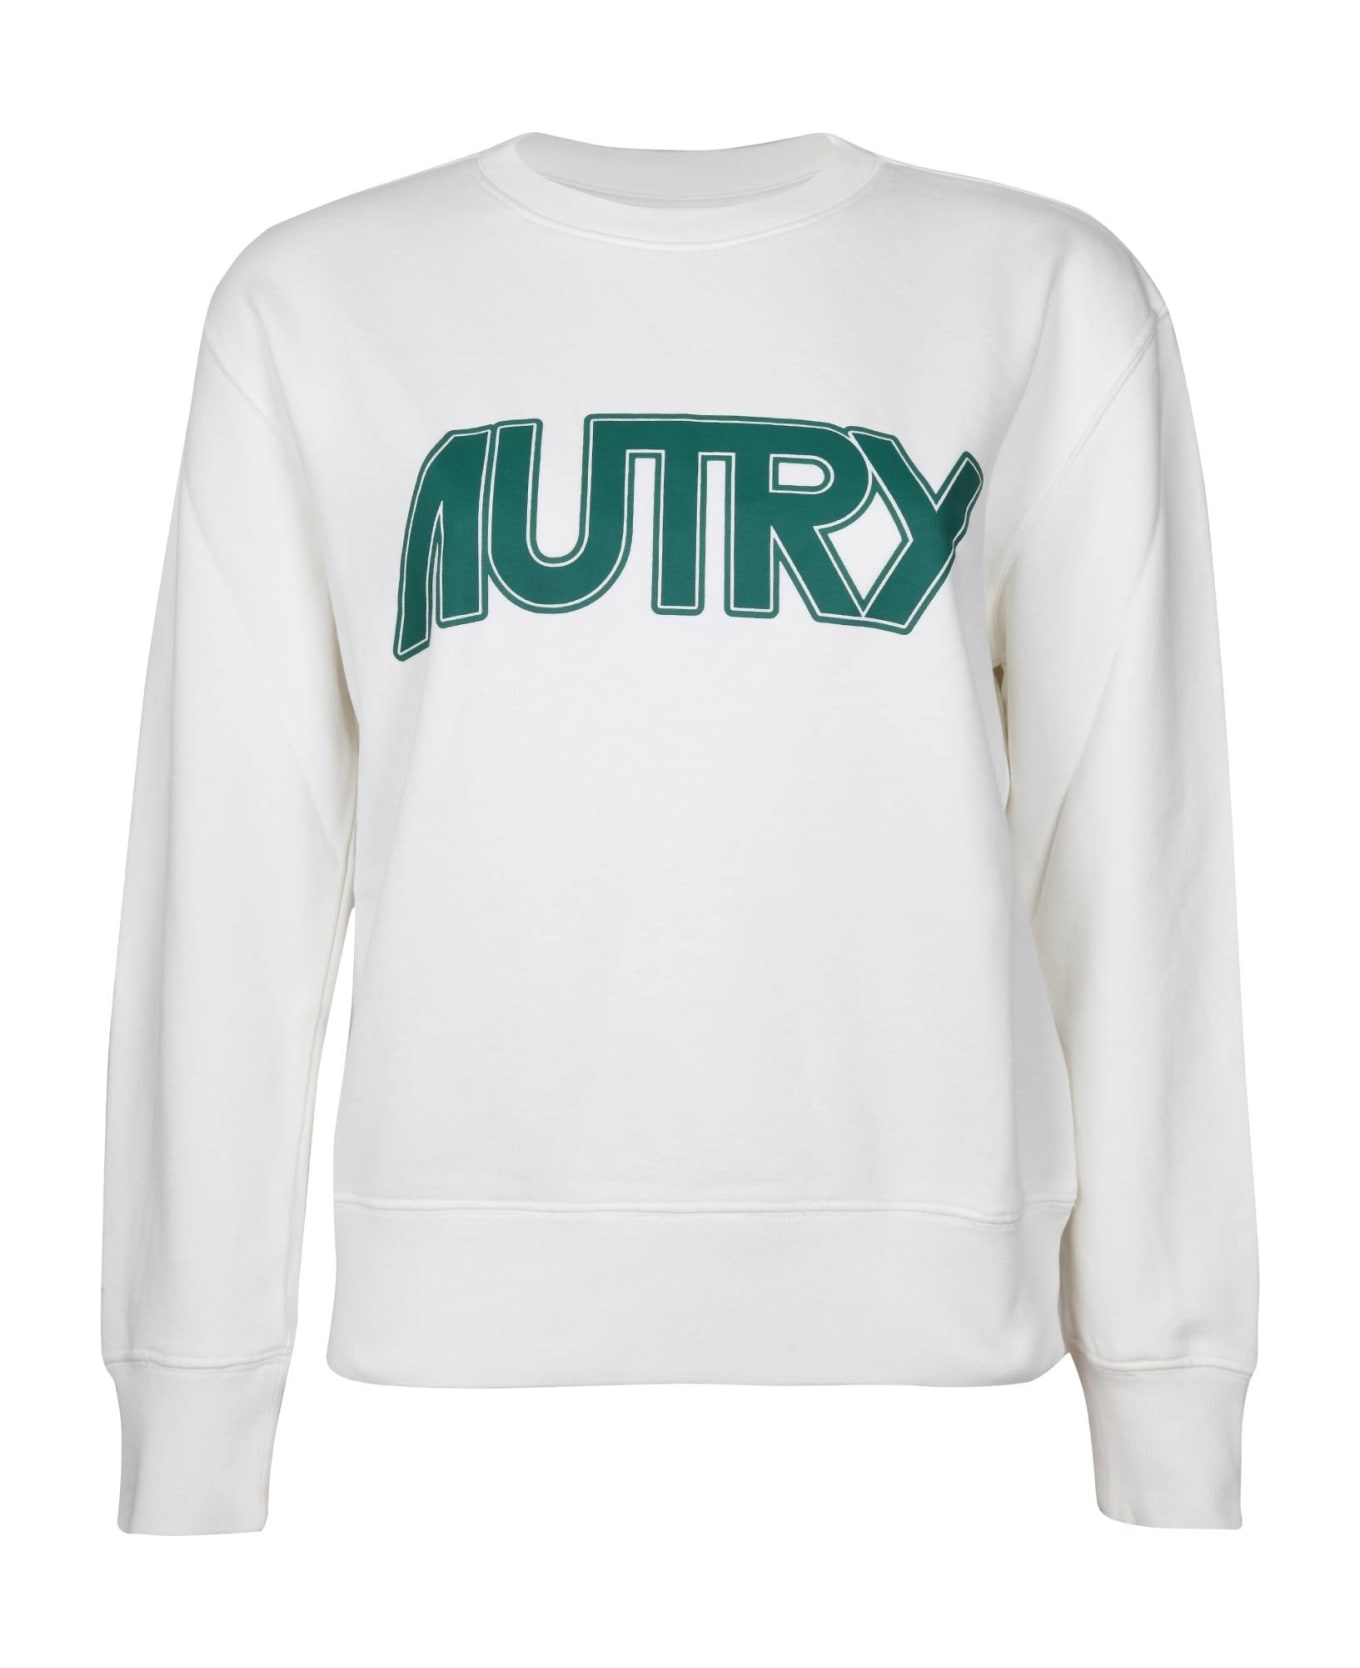 Autry Cotton Sweatshirt With Green Logo - White